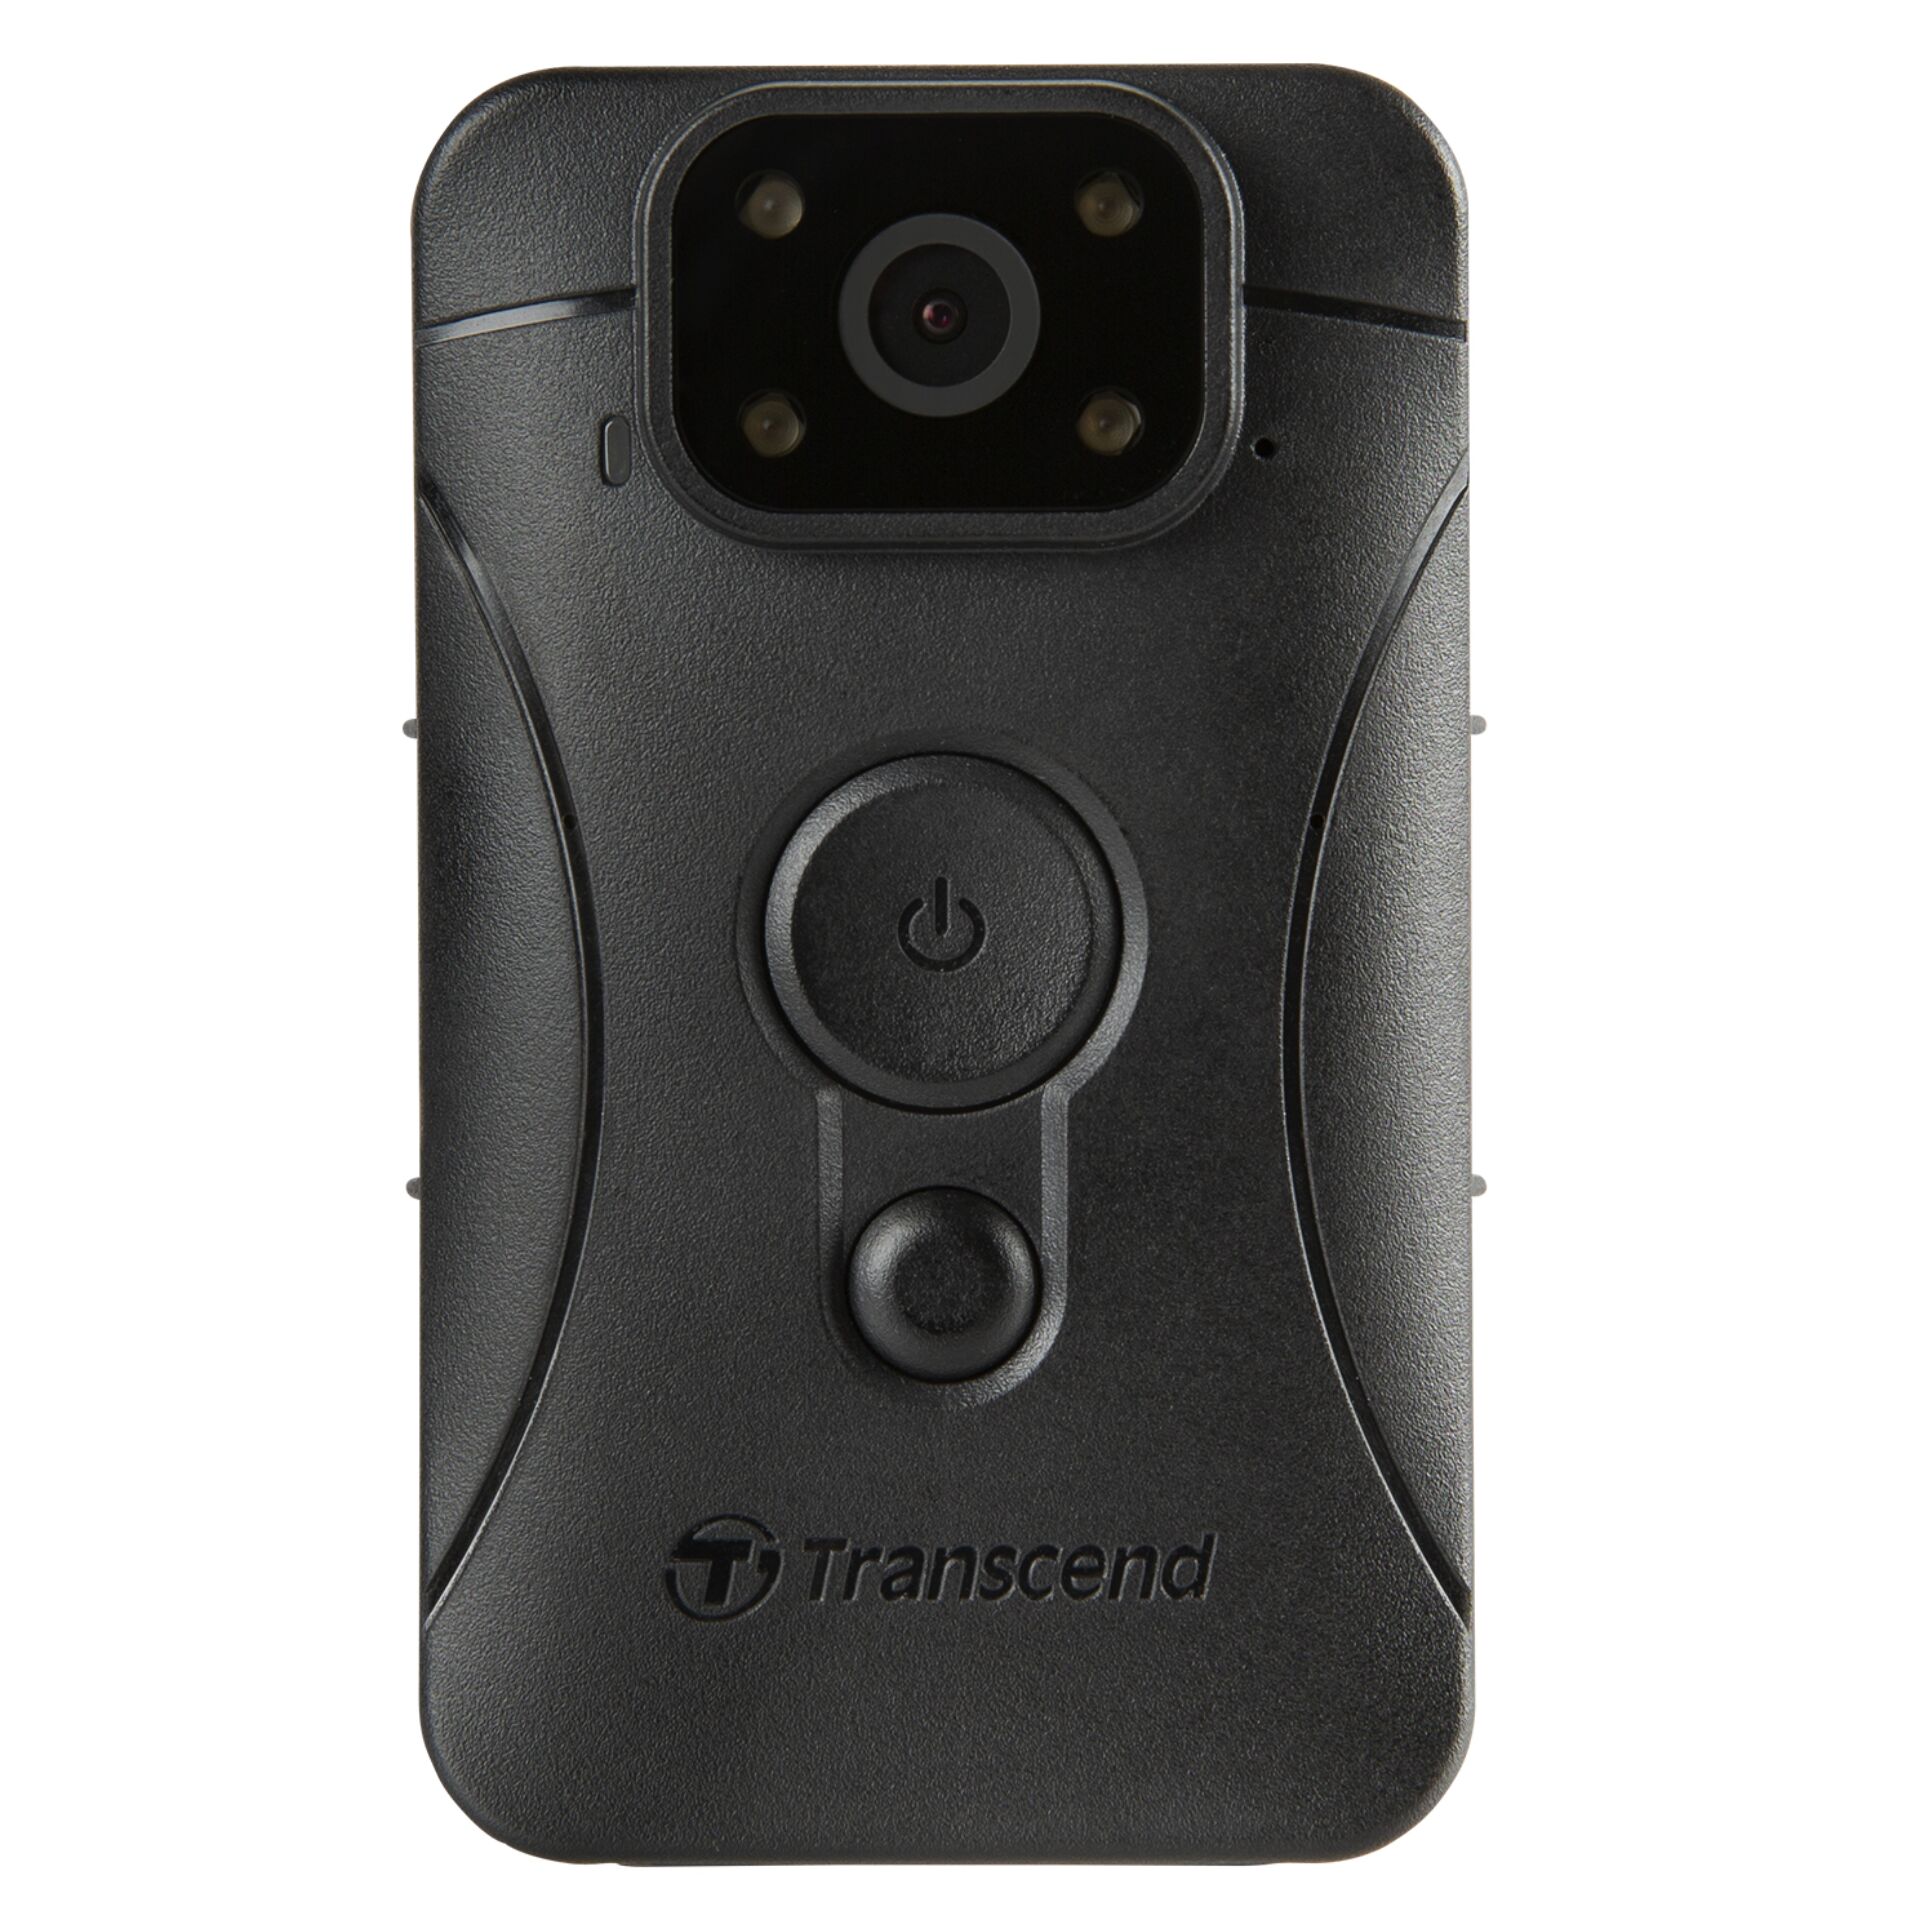 Transcend DrivePro Bodycam 10 